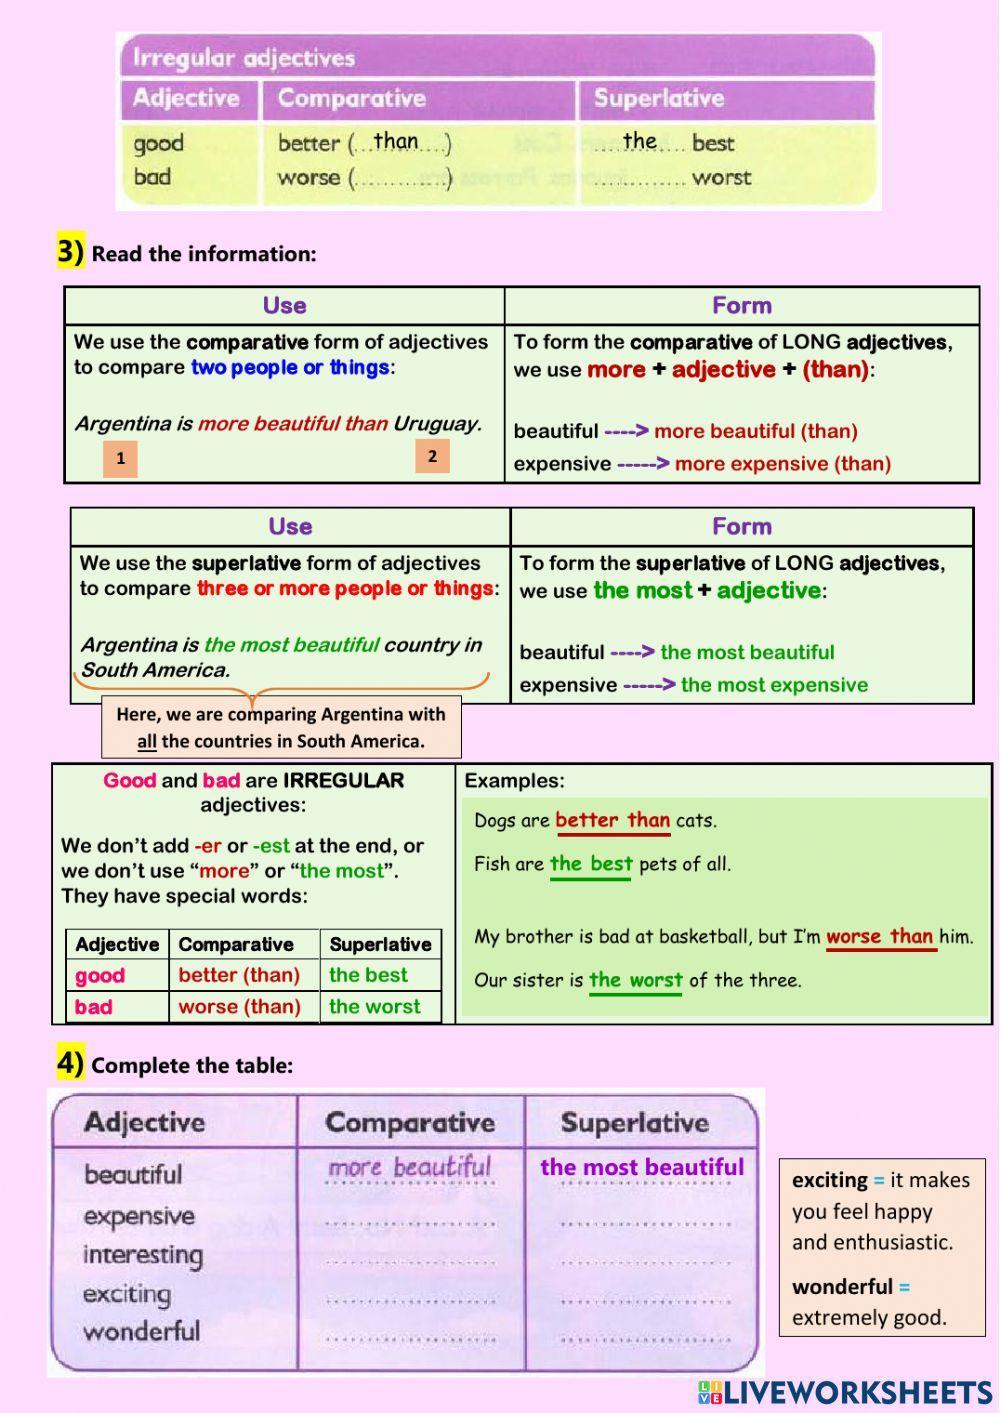 Comparatives and Superlatives - Long Adjectives and Irregular Adjectives